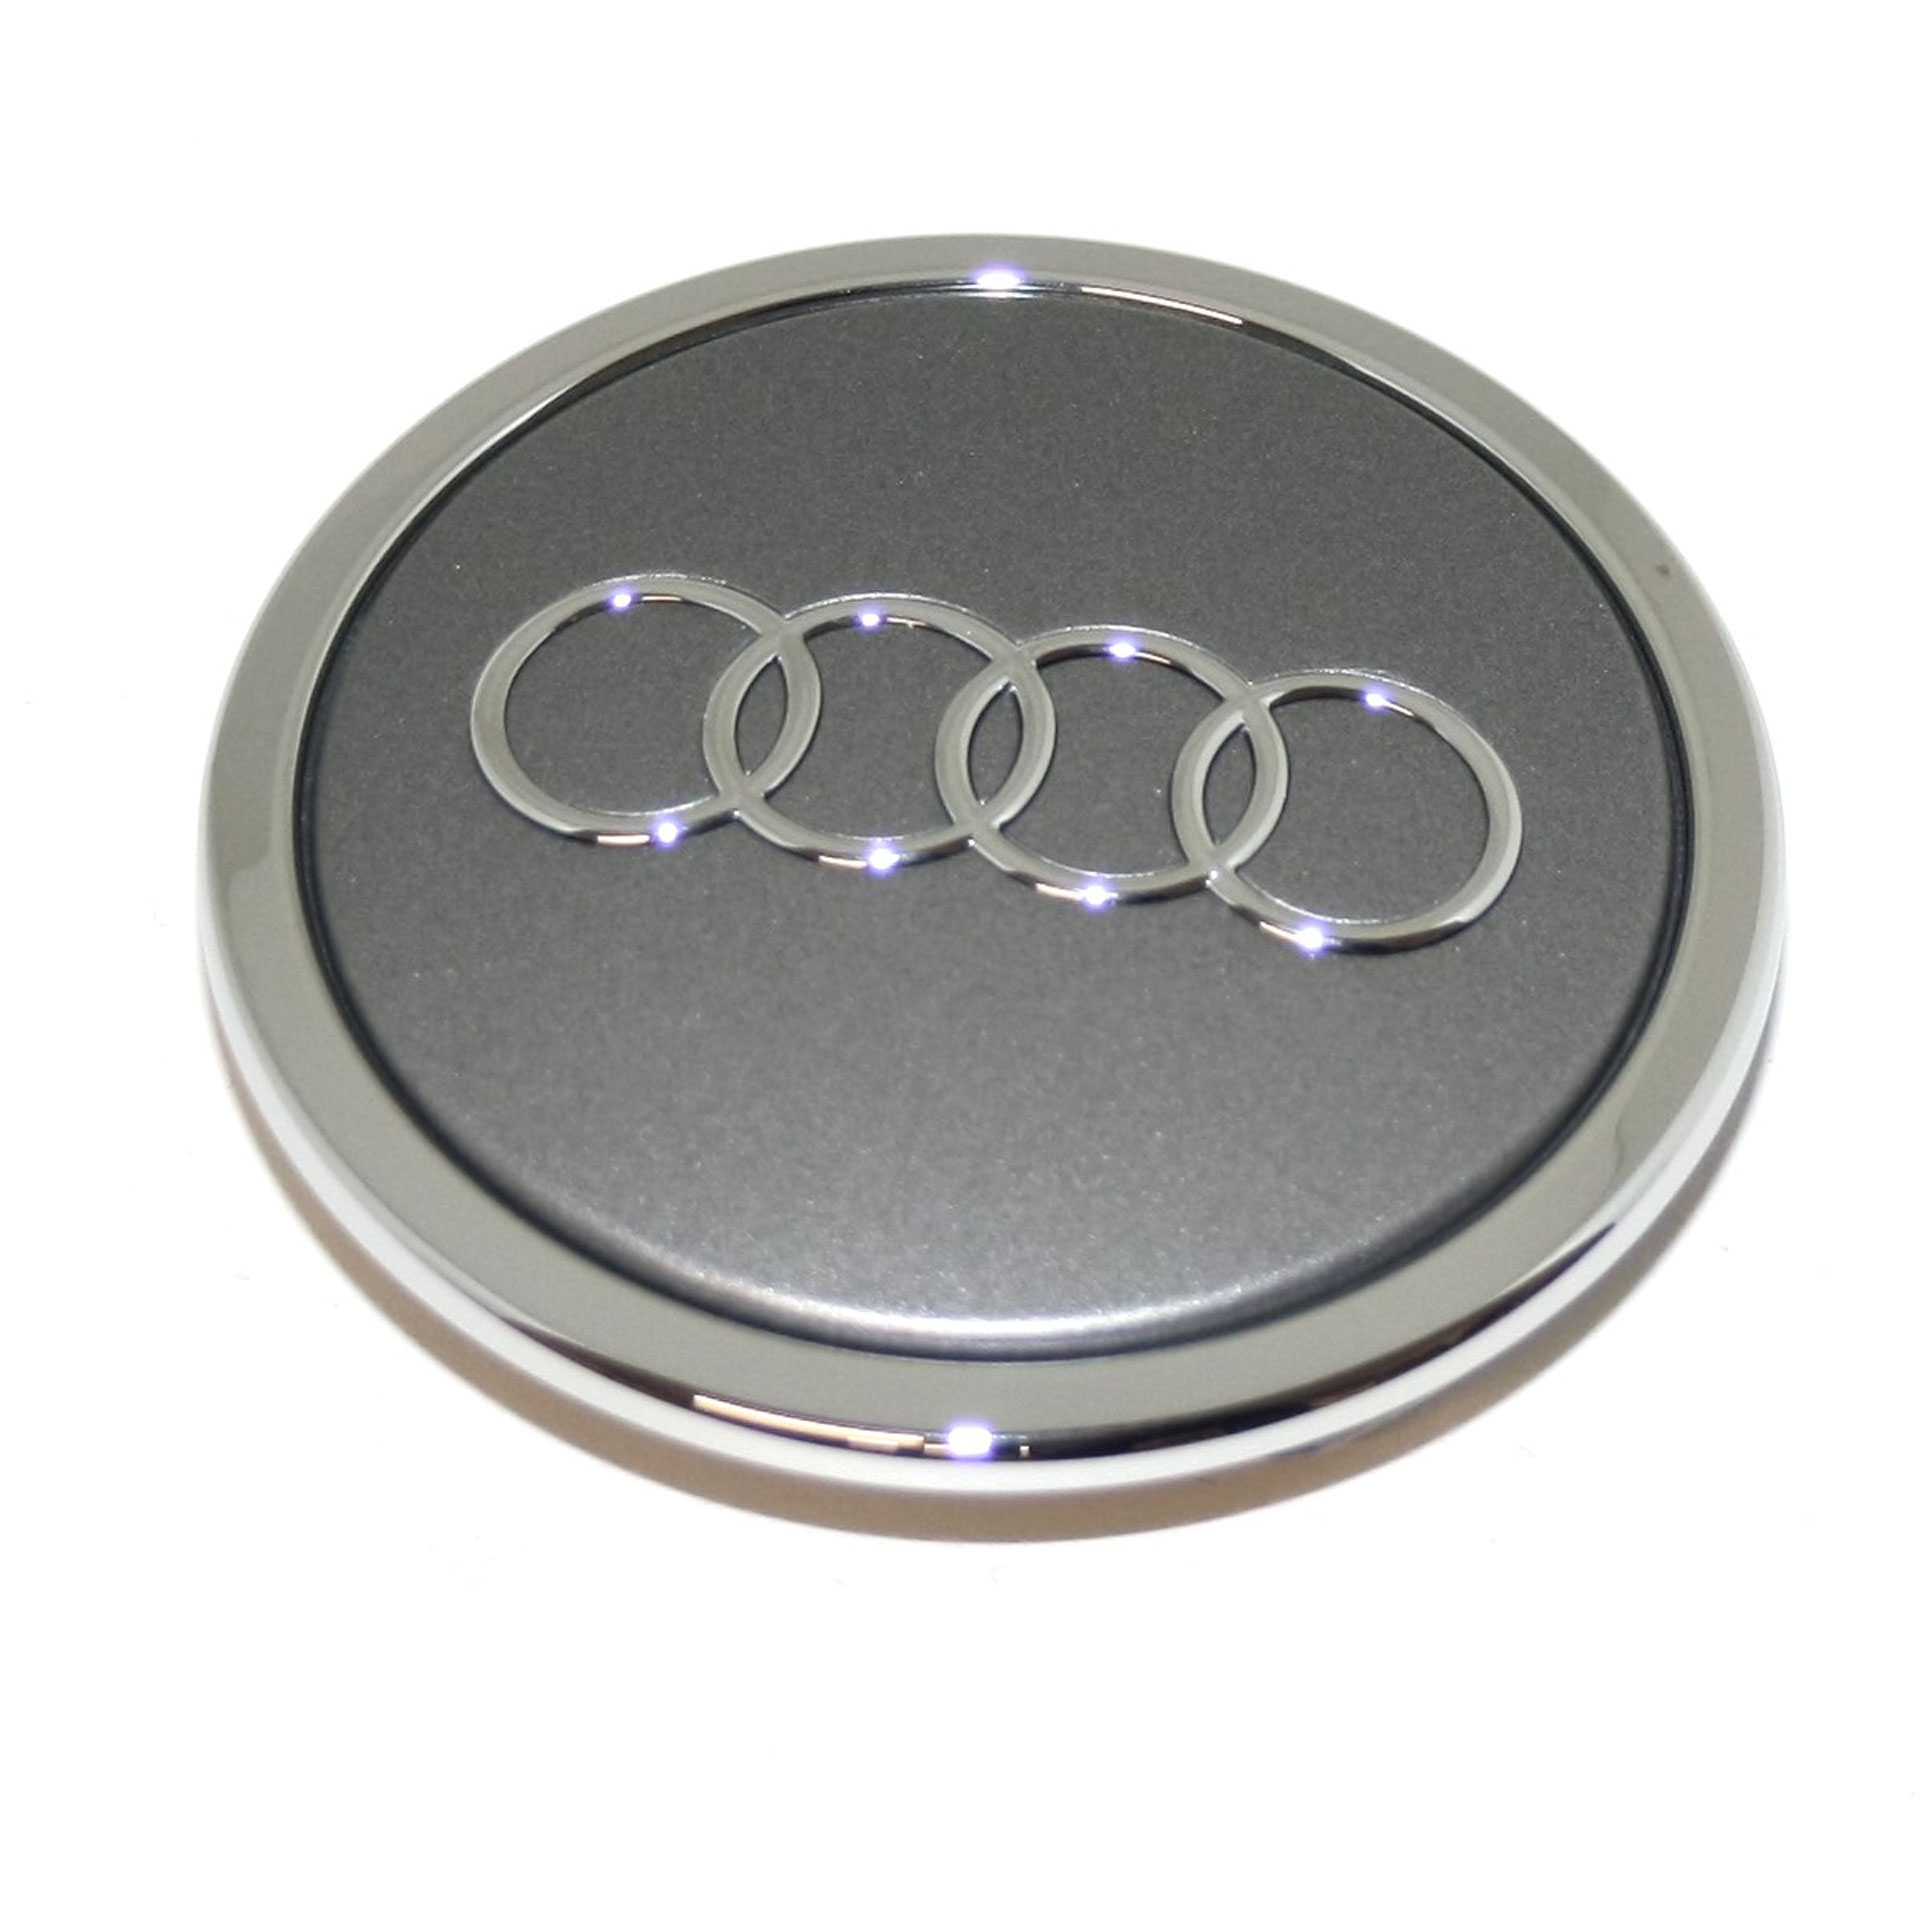 Audi Radzierkappe Felgendeckel Nabendeckel grau-metallic 8T0601170A7ZJ